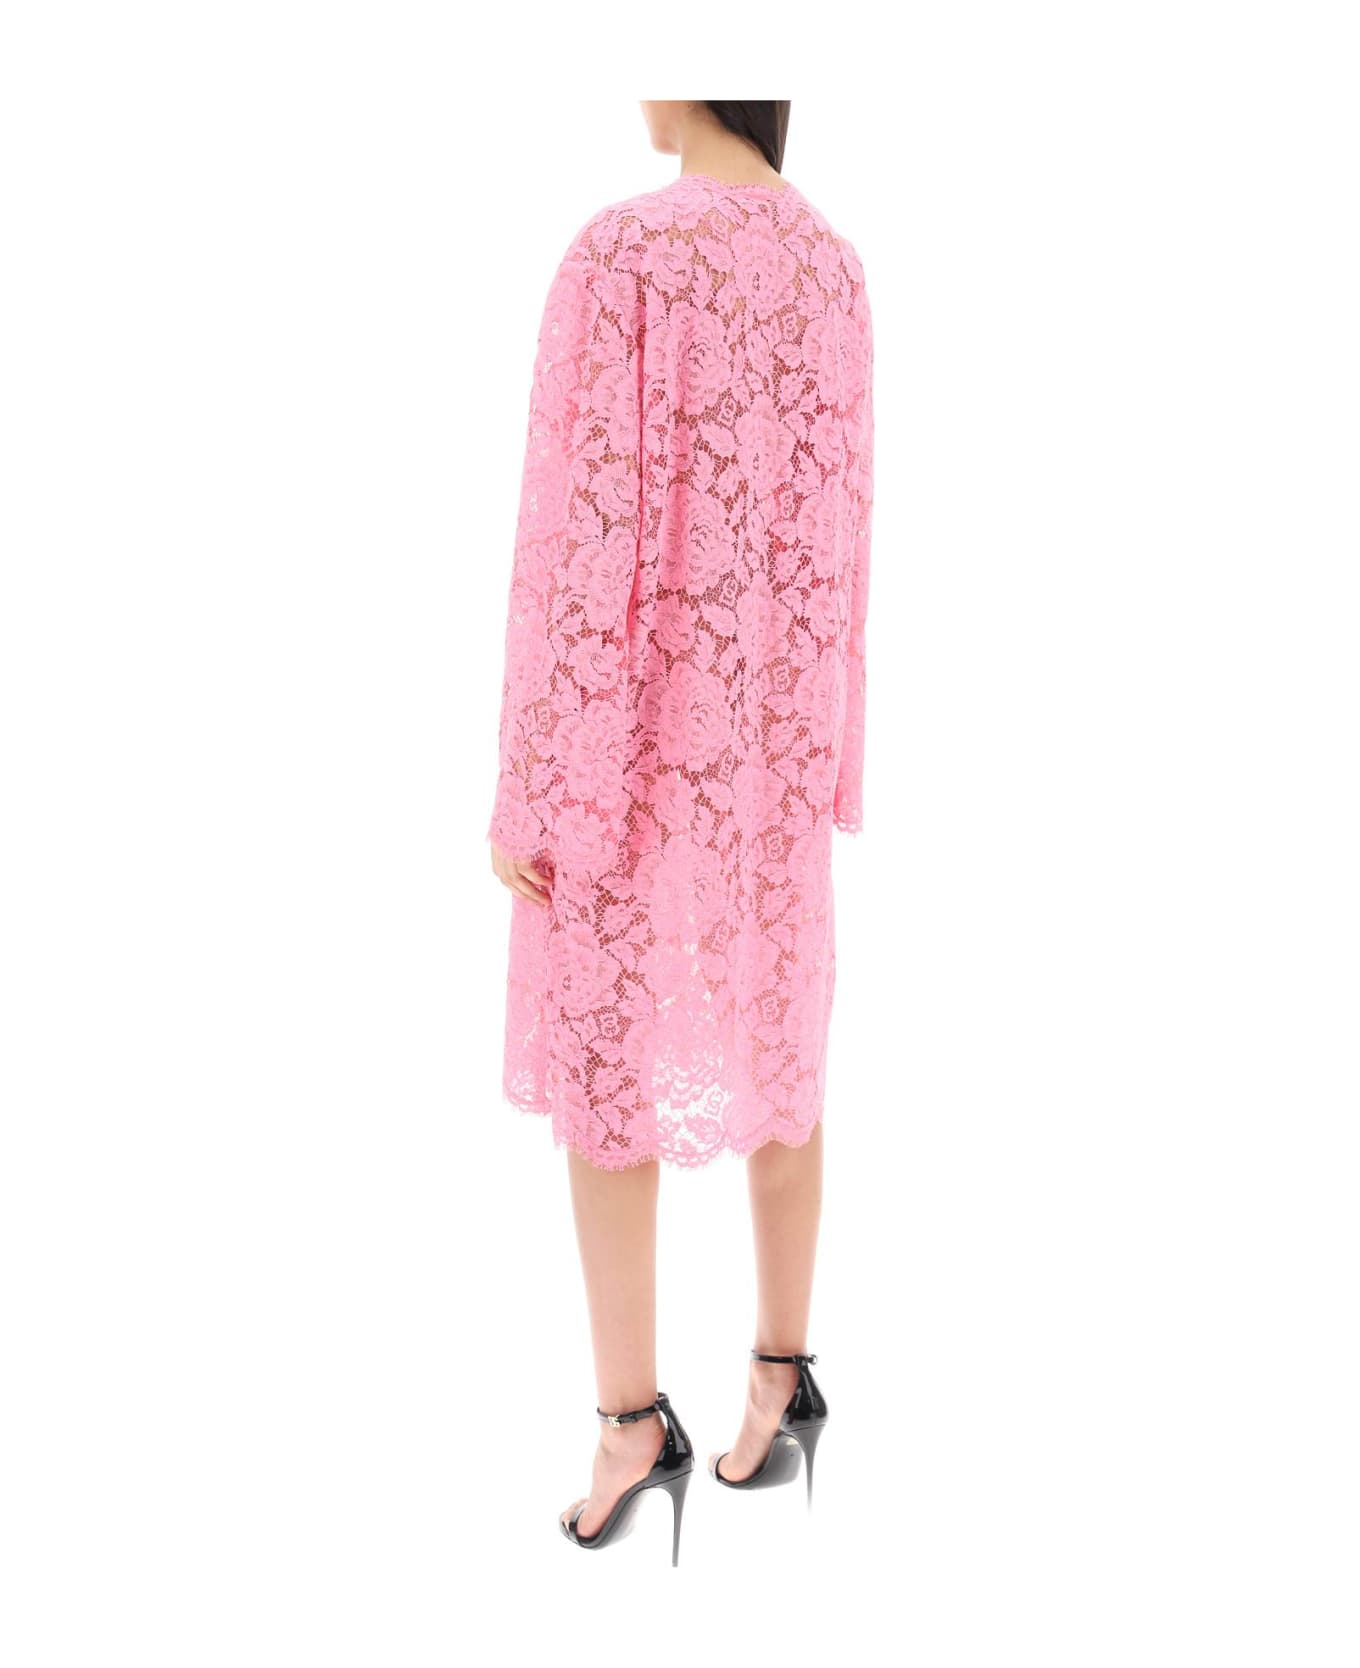 Dolce & Gabbana Dust Coat - ROSA 2 (Pink)